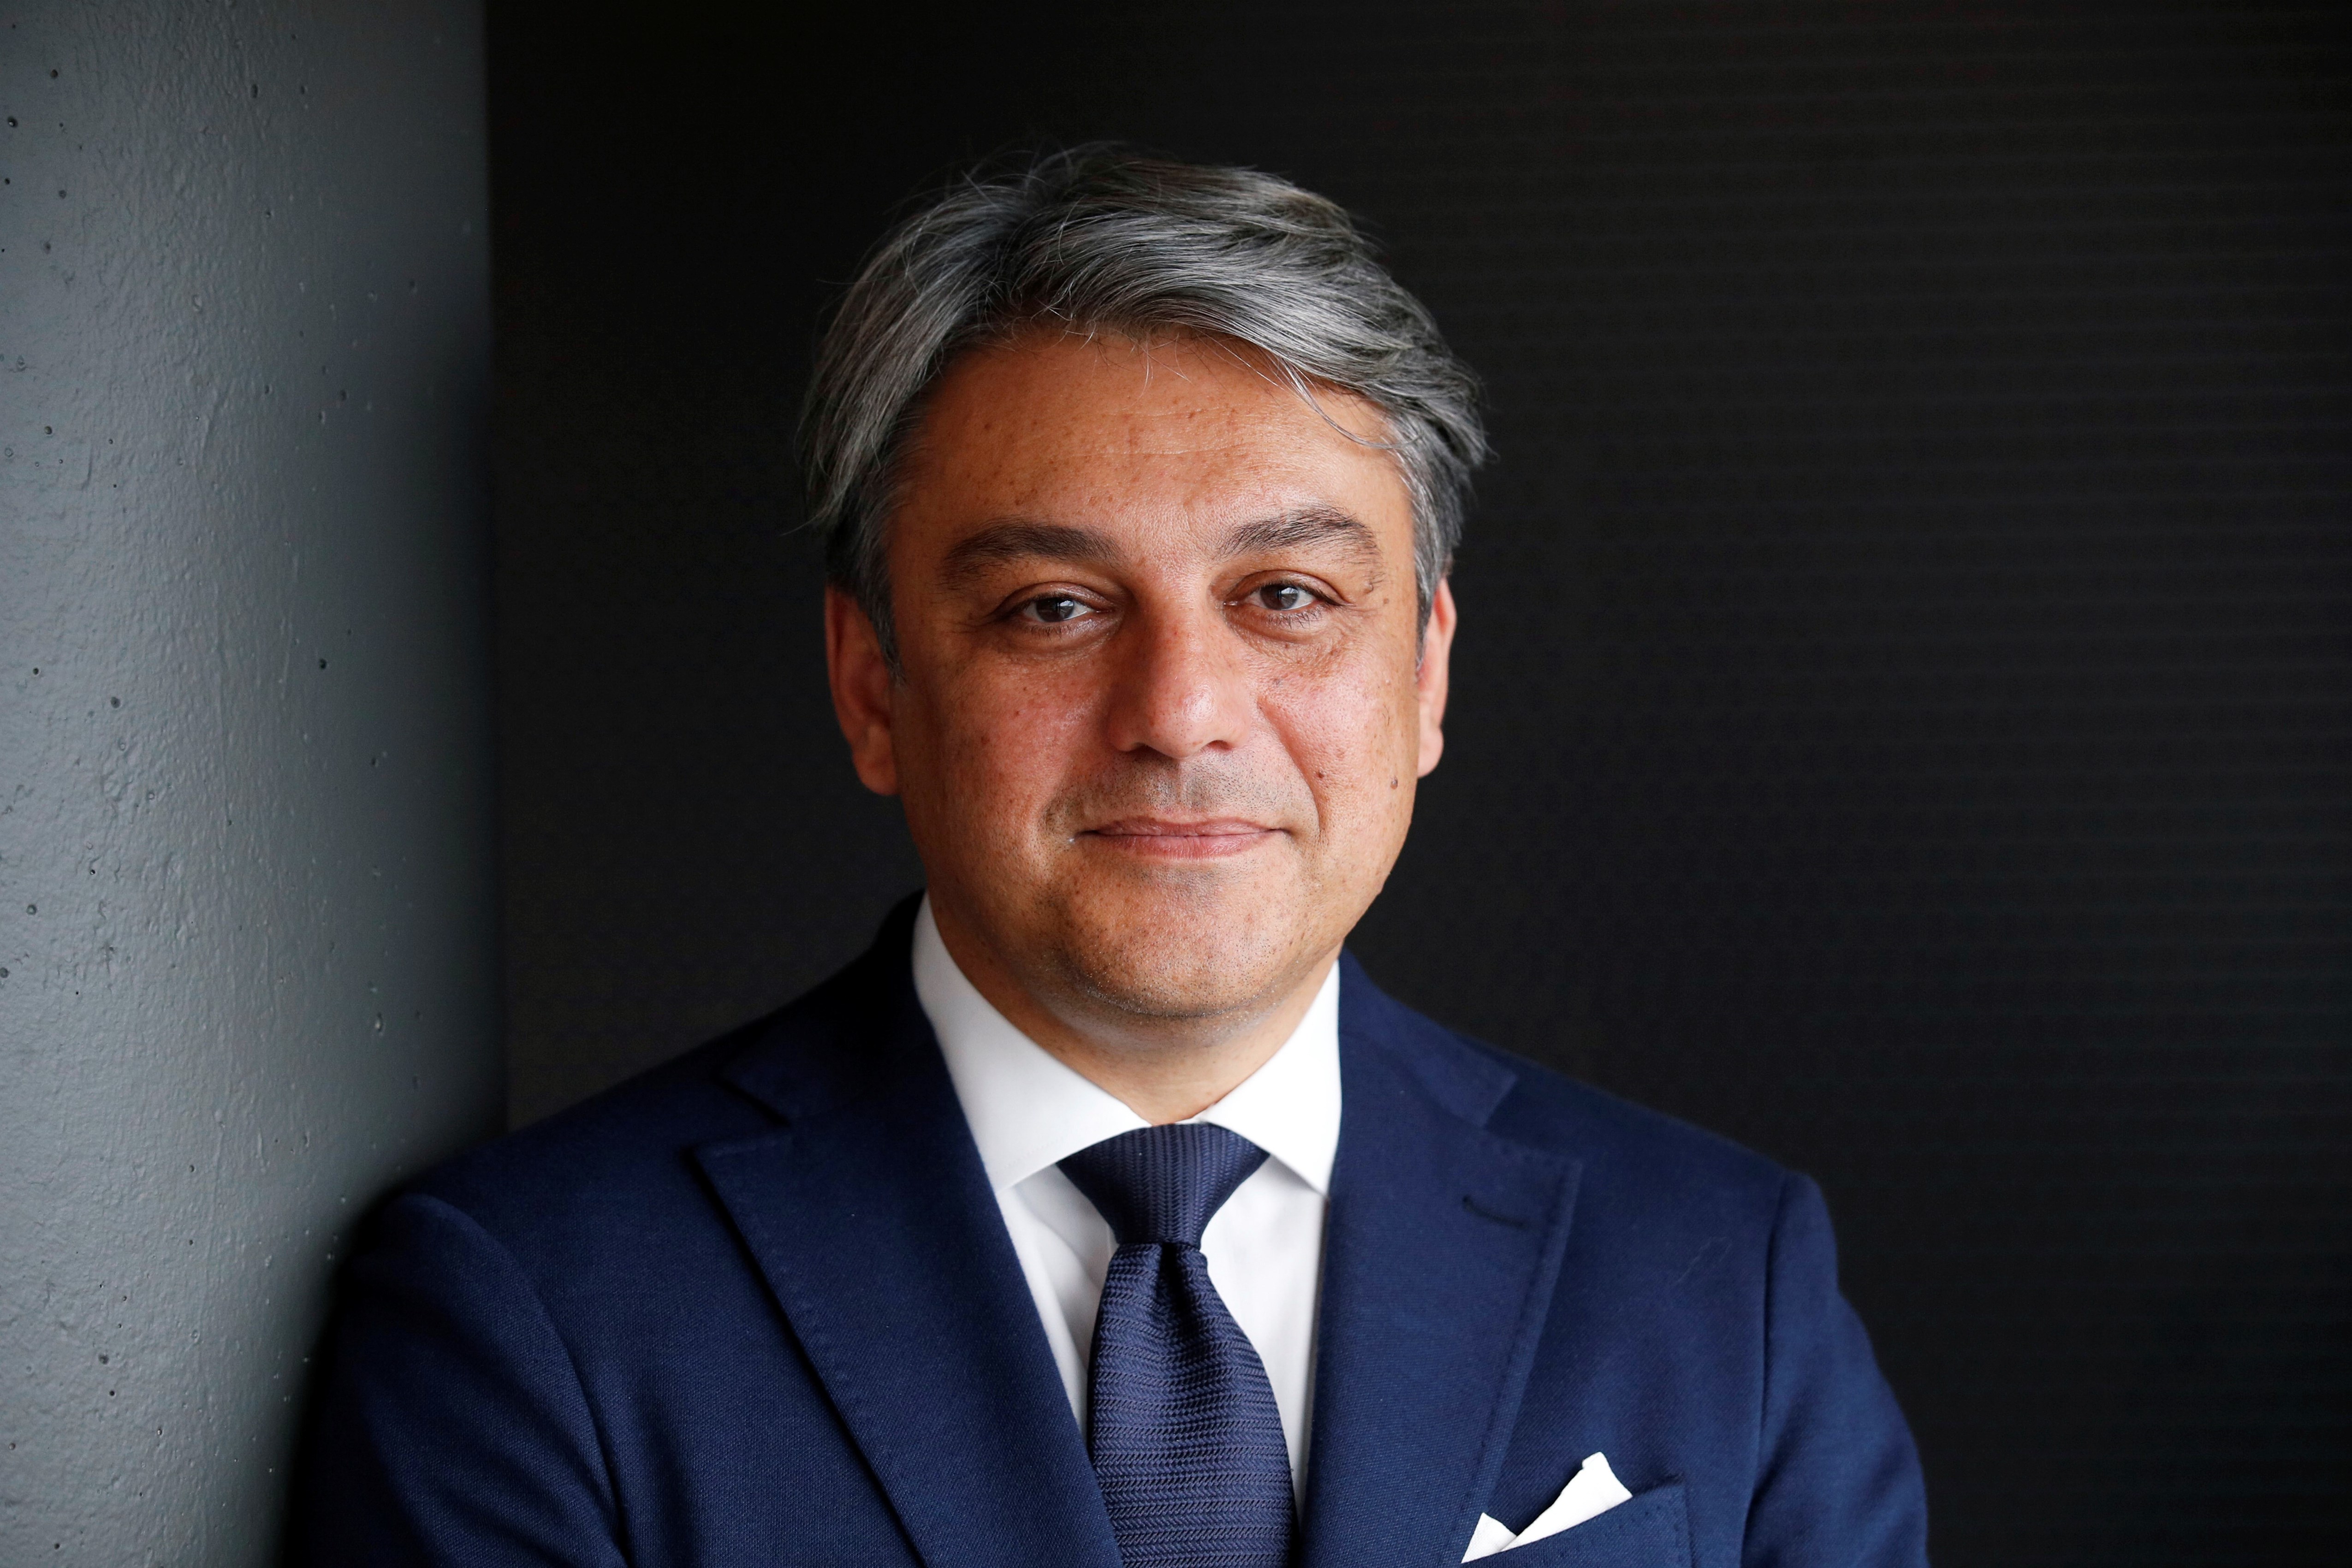 Luca de Meo, Renault CEO